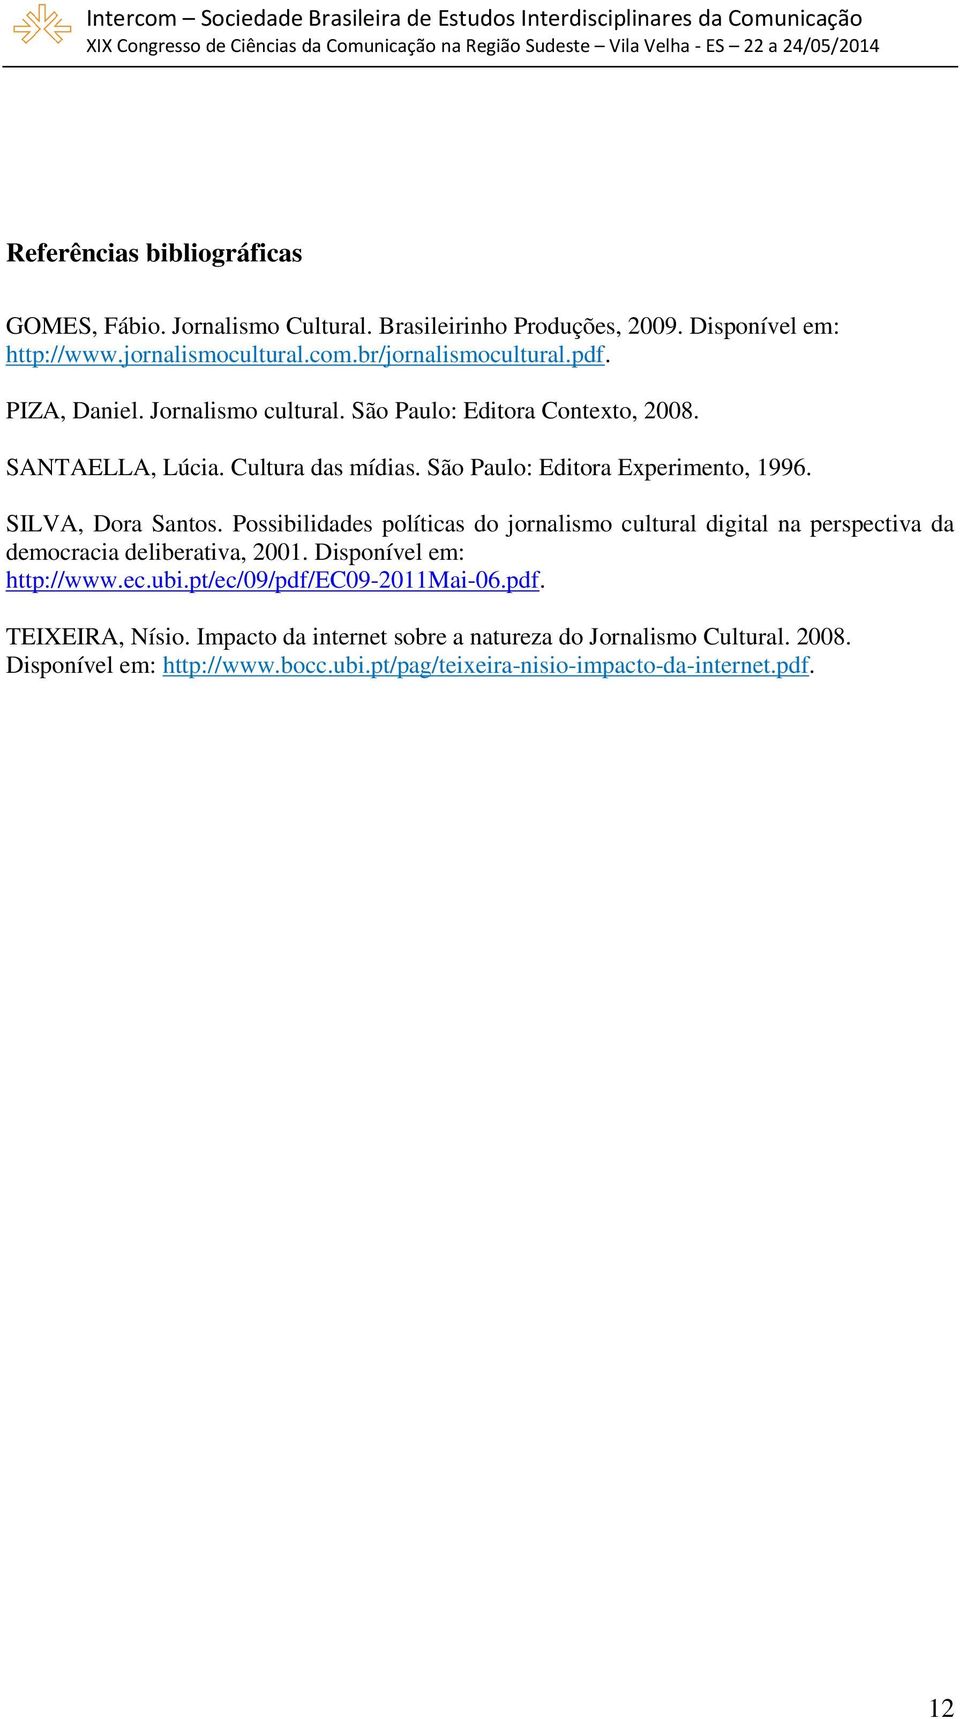 Possibilidades políticas do jornalismo cultural digital na perspectiva da democracia deliberativa, 2001. Disponível em: http://www.ec.ubi.pt/ec/09/pdf/ec09-2011mai-06.